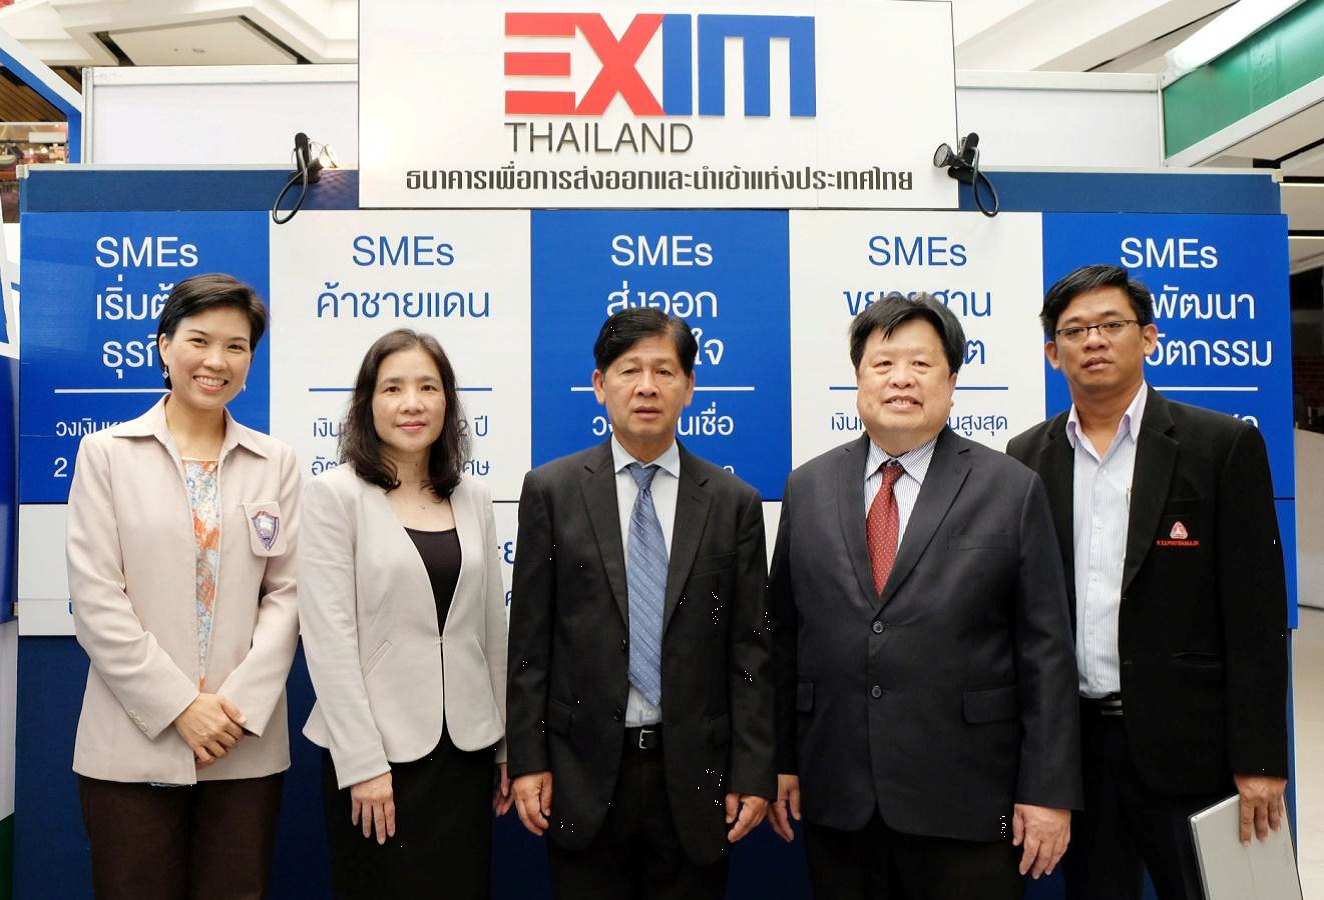 EXIM BANK ร่วมออกบูทในงานไทยแลนด์ สมาร์ทมันนี่ สัญจรพิษณุโลก ครั้งที่ 2